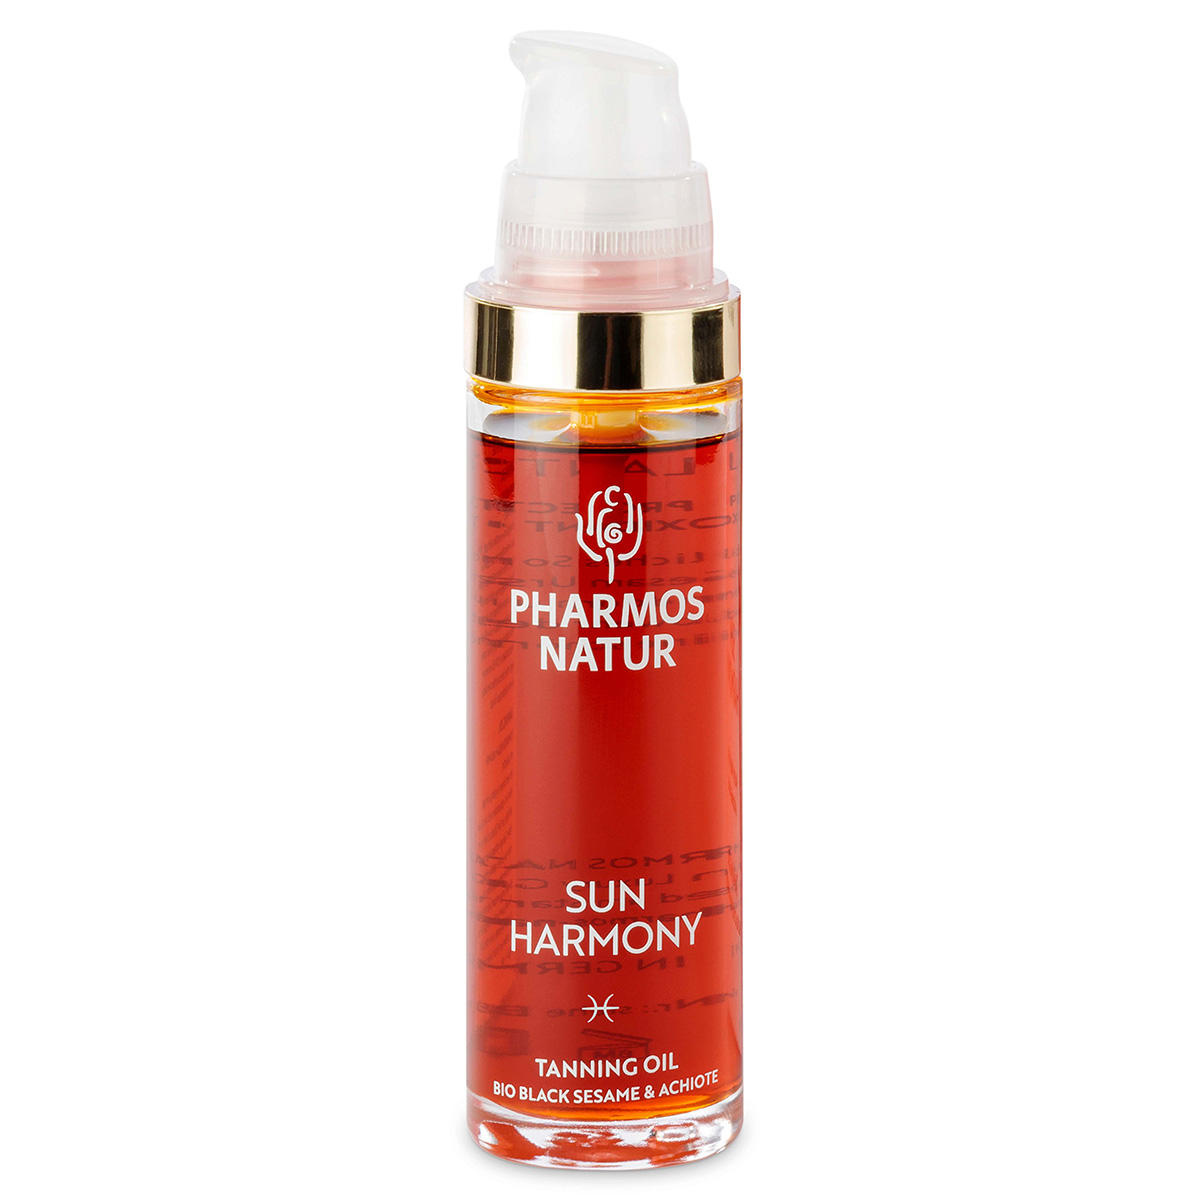 PHARMOS NATUR Sun Harmony Tanning Oil 60 ml - 1